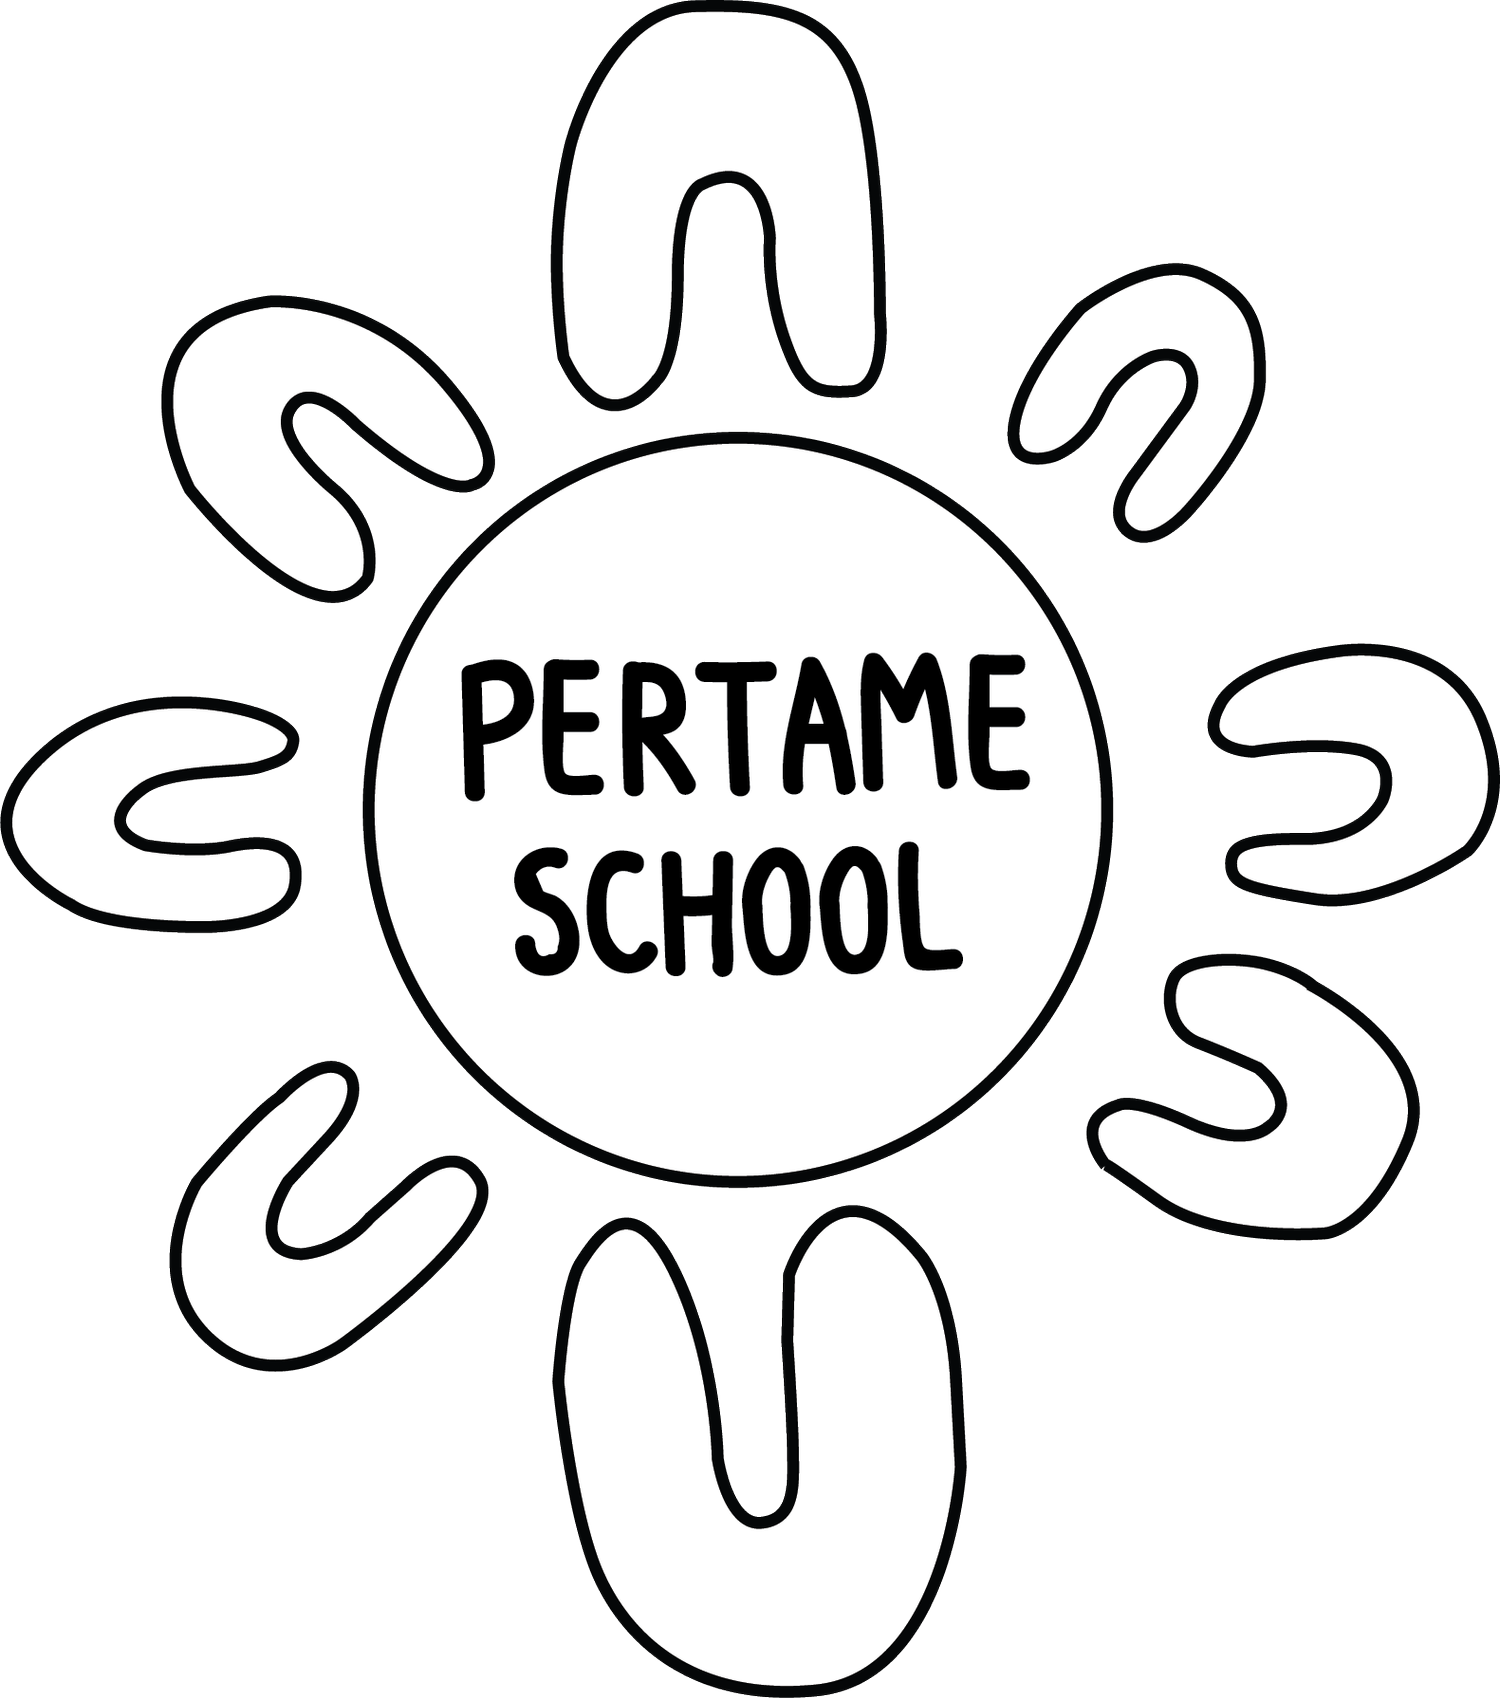 Pertame School